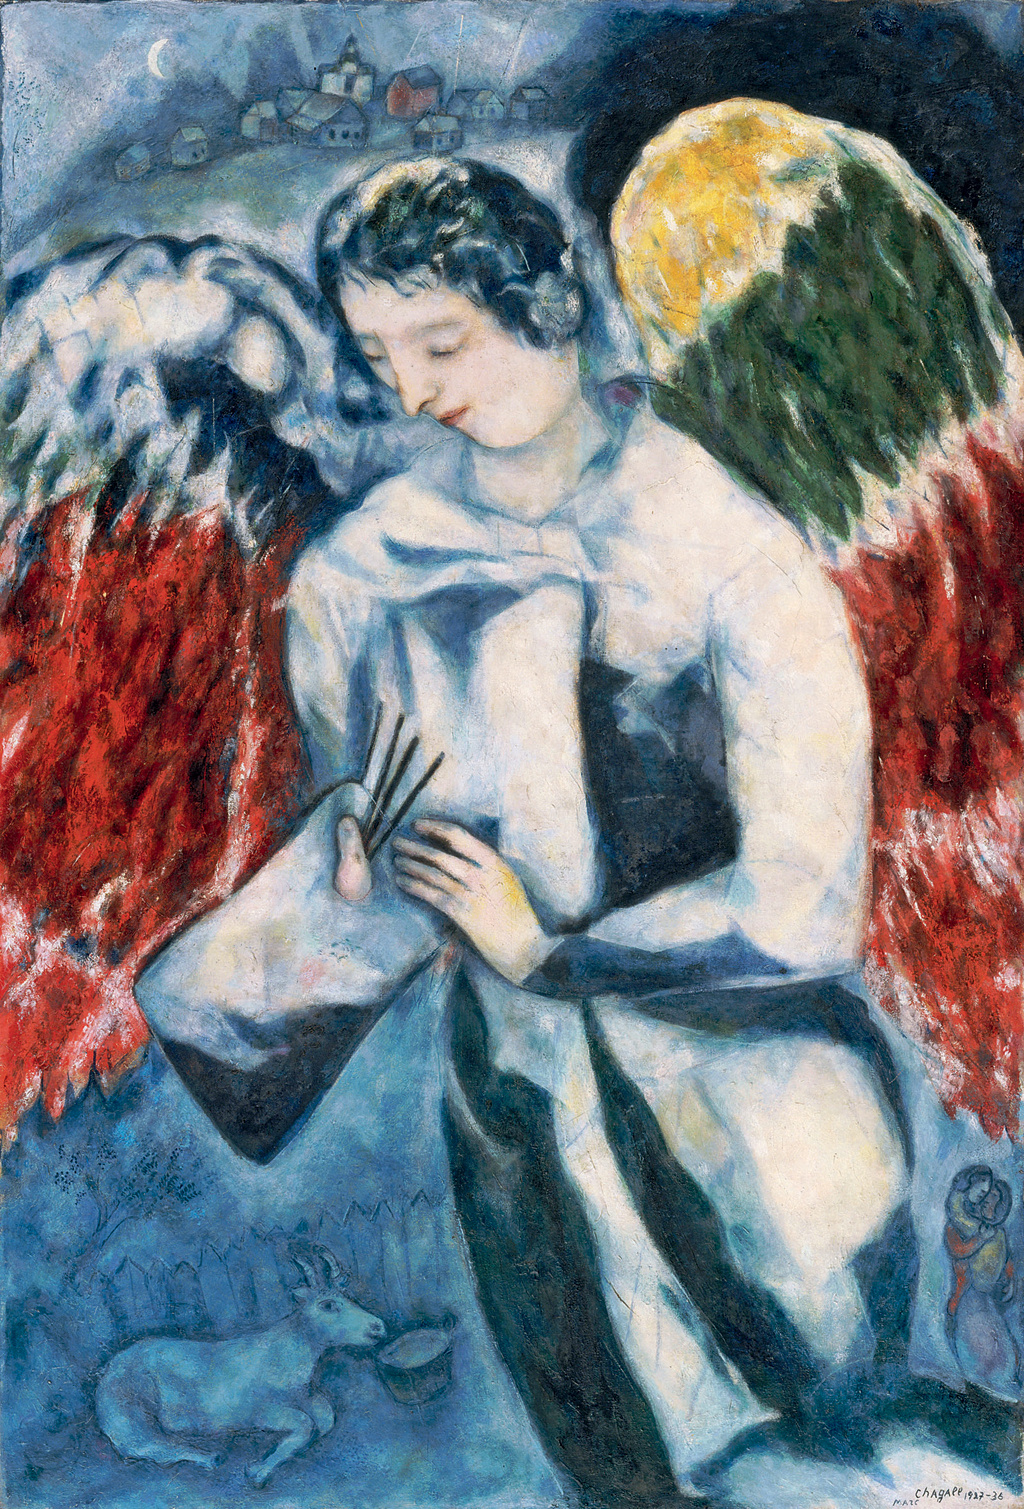 Marc+Chagall-1887-1985 (251).jpg